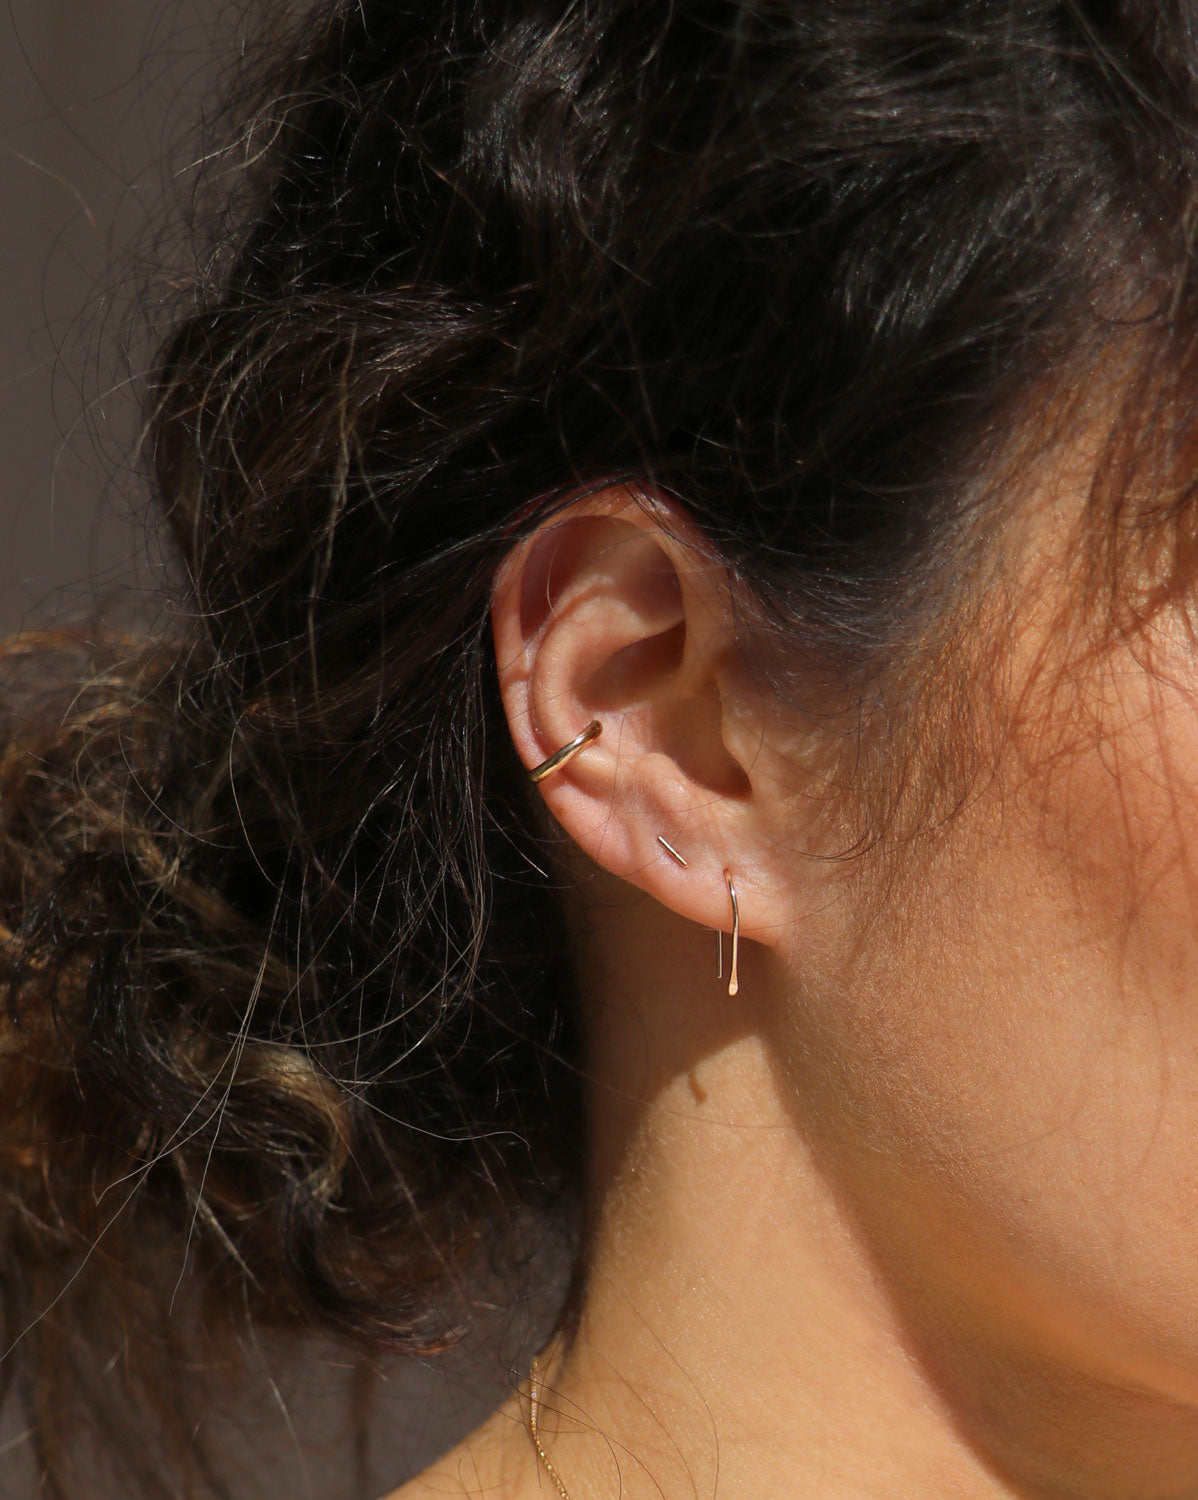 Pair of 9k arc earrings gold